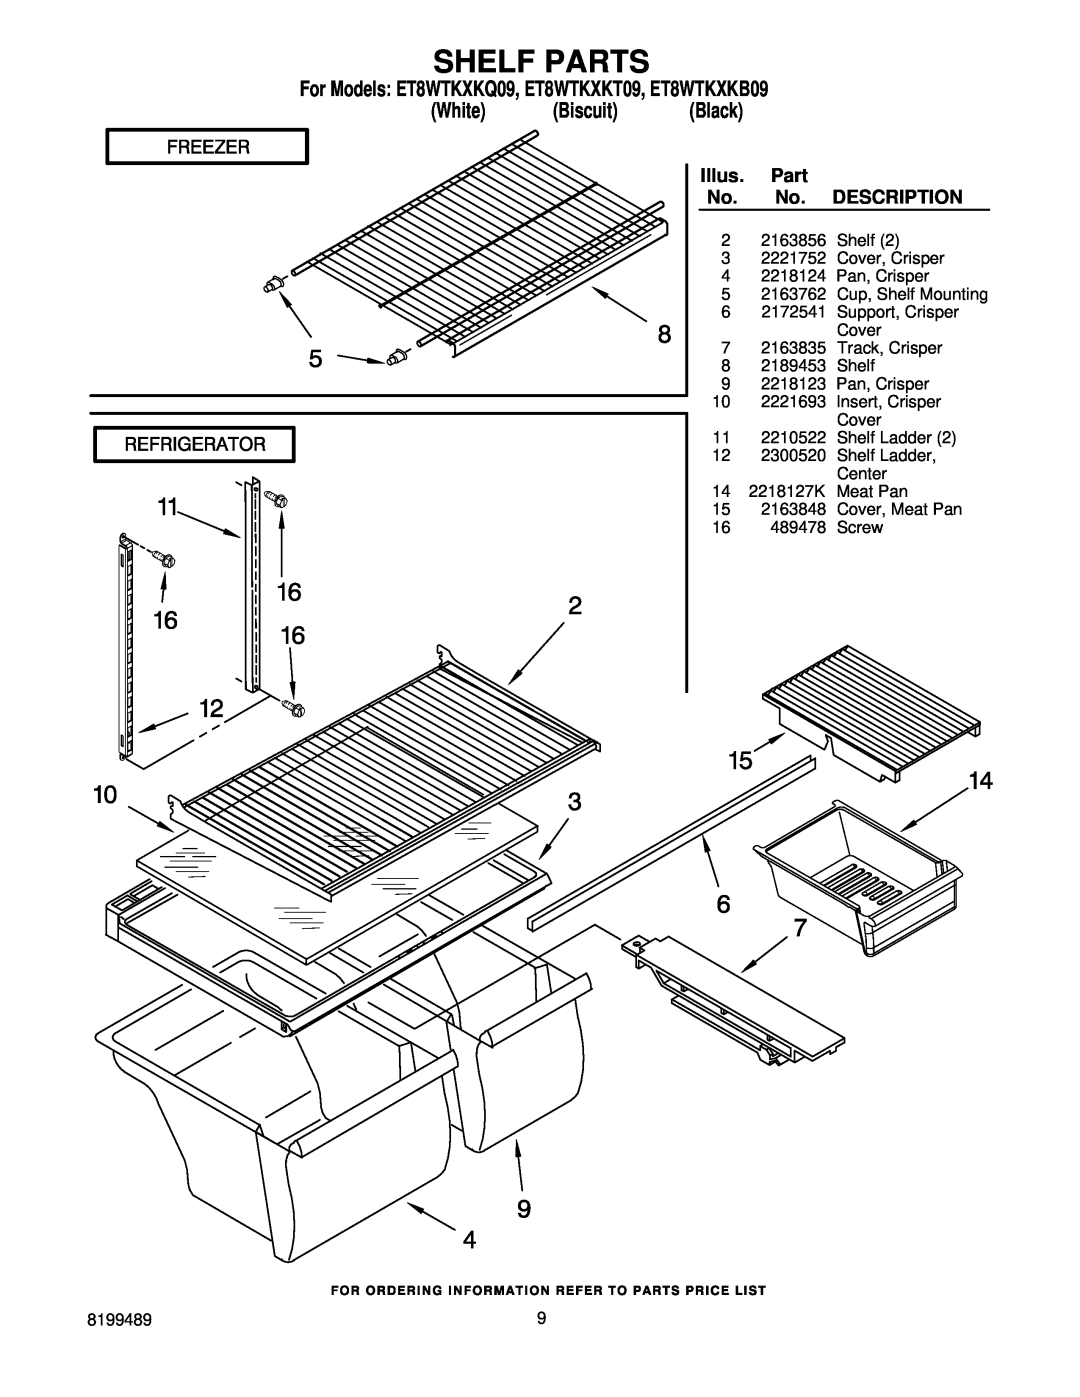 Whirlpool manual Shelf Parts, For Models ET8WTKXKQ09, ET8WTKXKT09, ET8WTKXKB09 White Biscuit Black, Illus, Description 